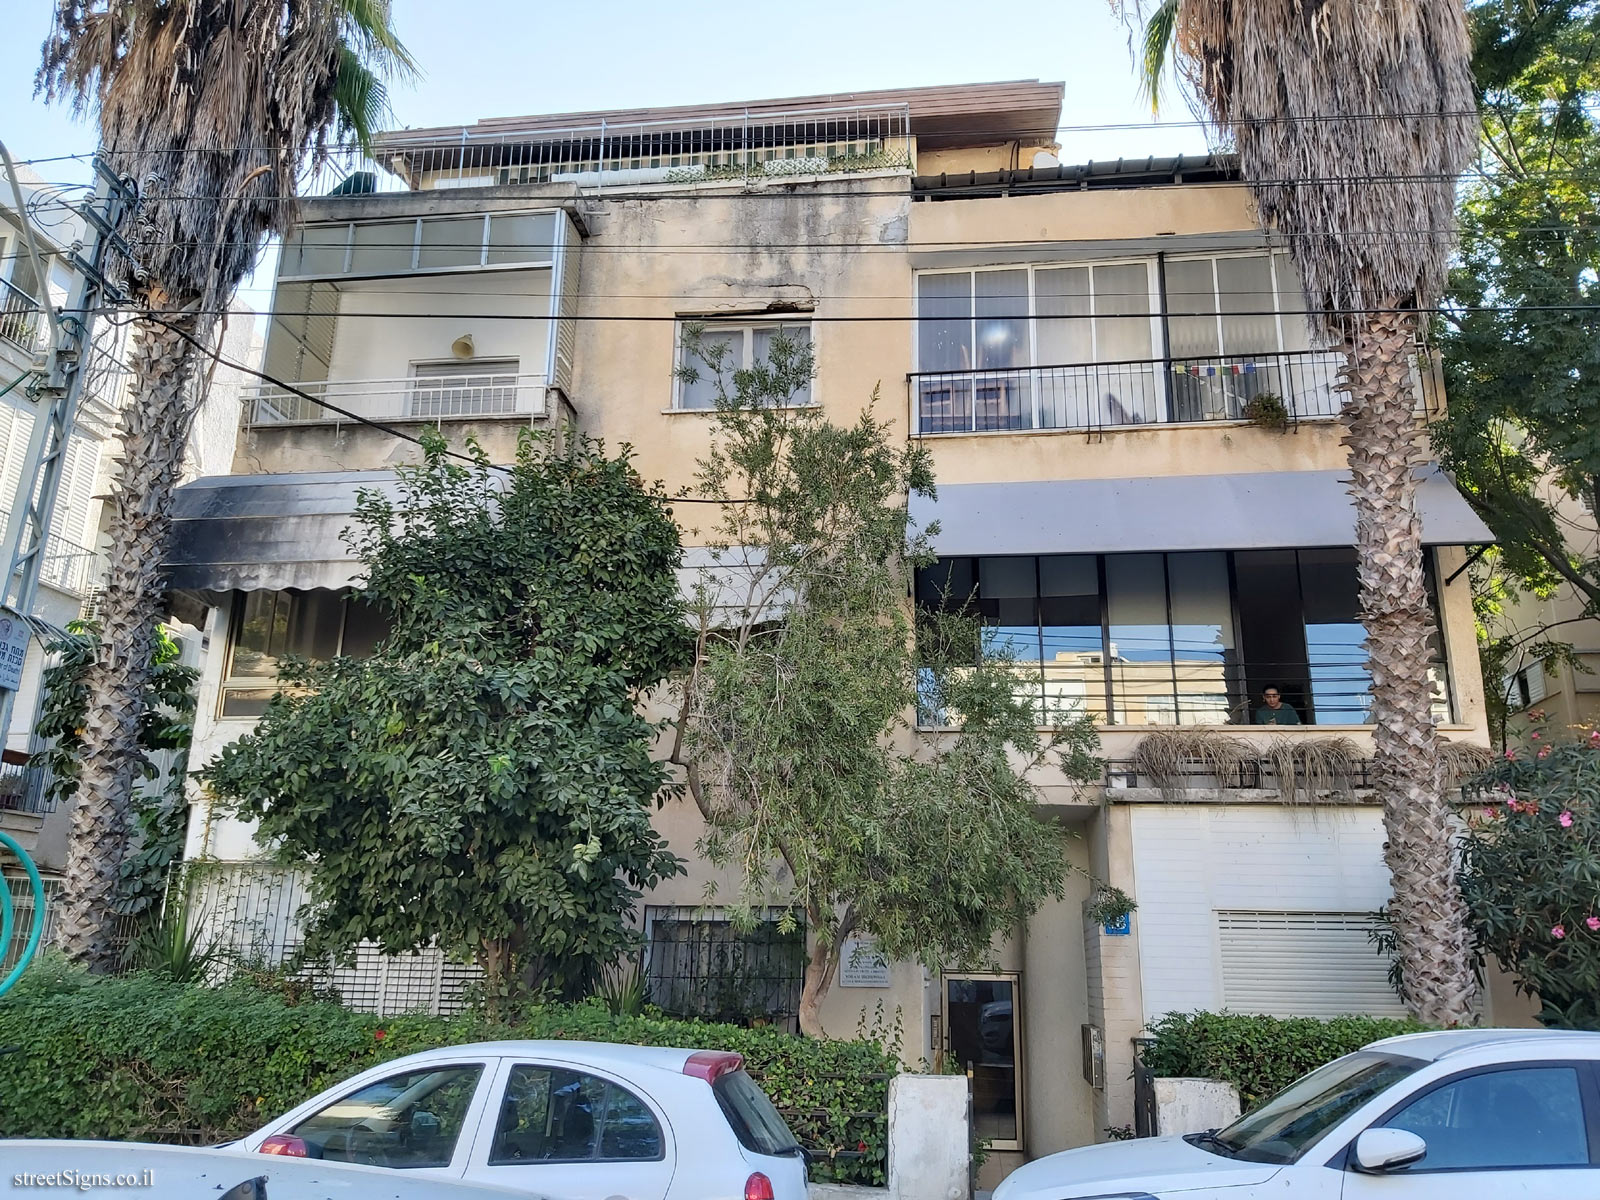 The house of Yoram Bronowski - Gottlieb St 16, Tel Aviv-Yafo, Israel